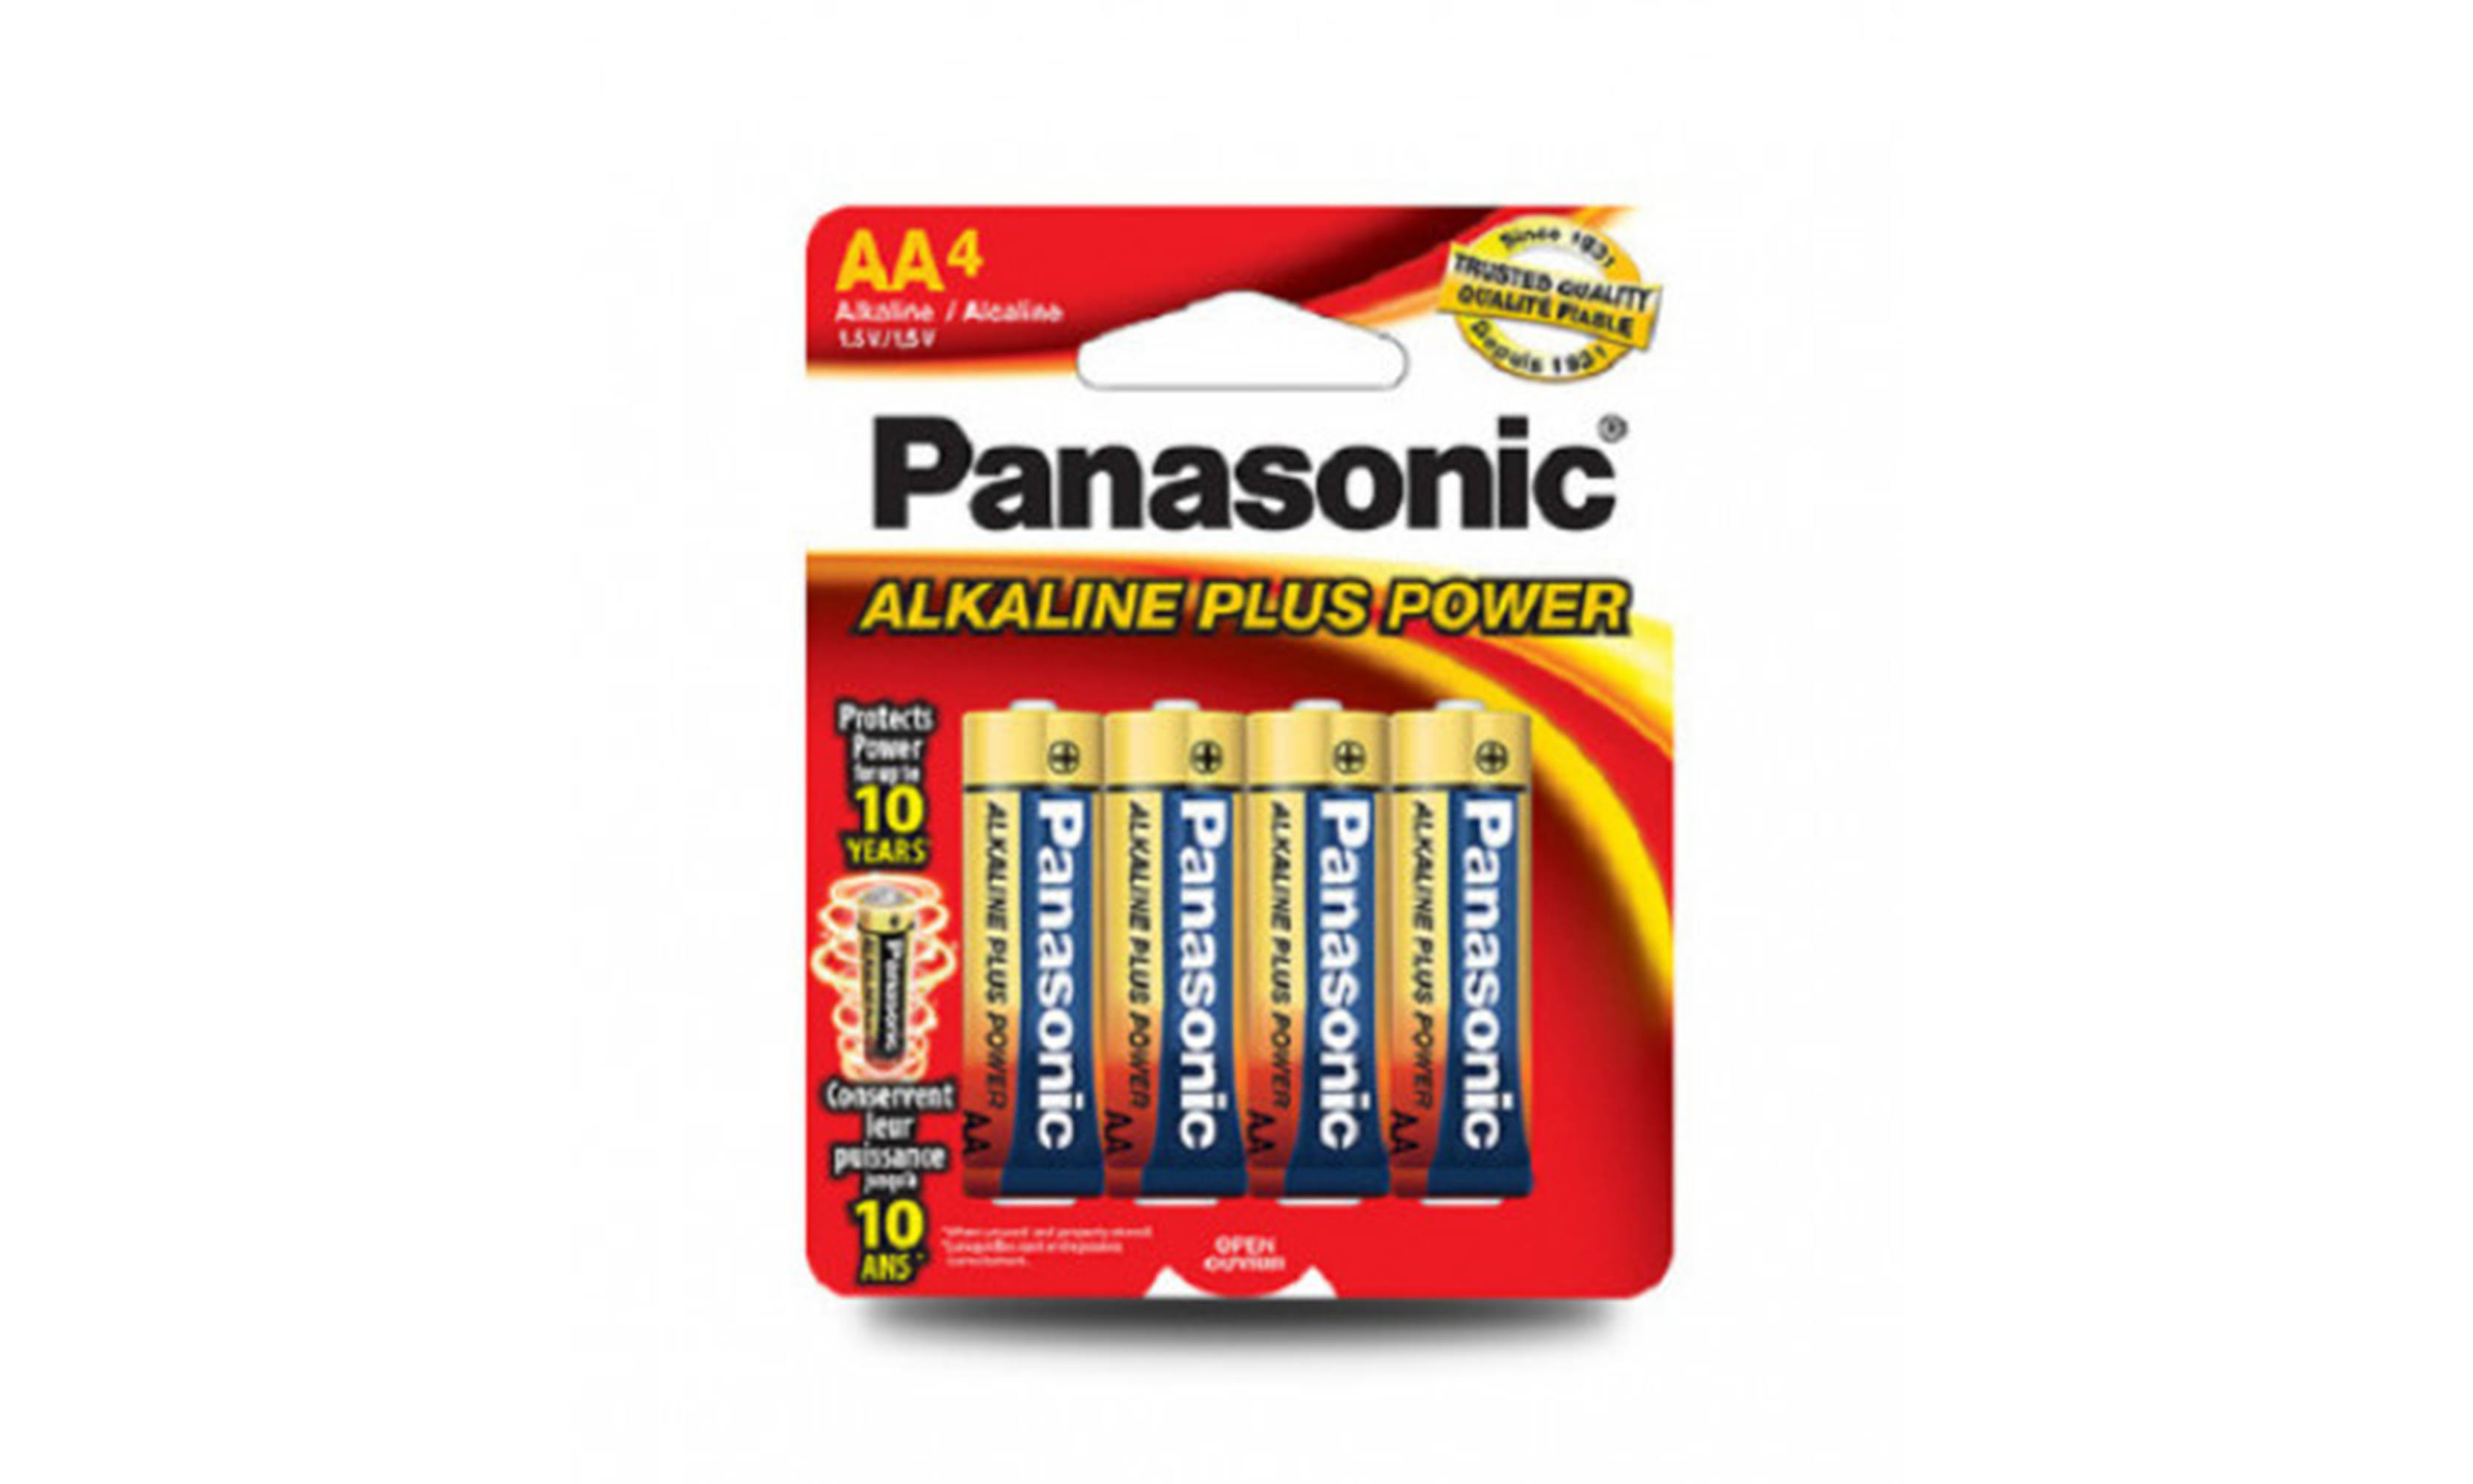 Panasonic Alkaline Plus Batteries - AA, 4 Pack